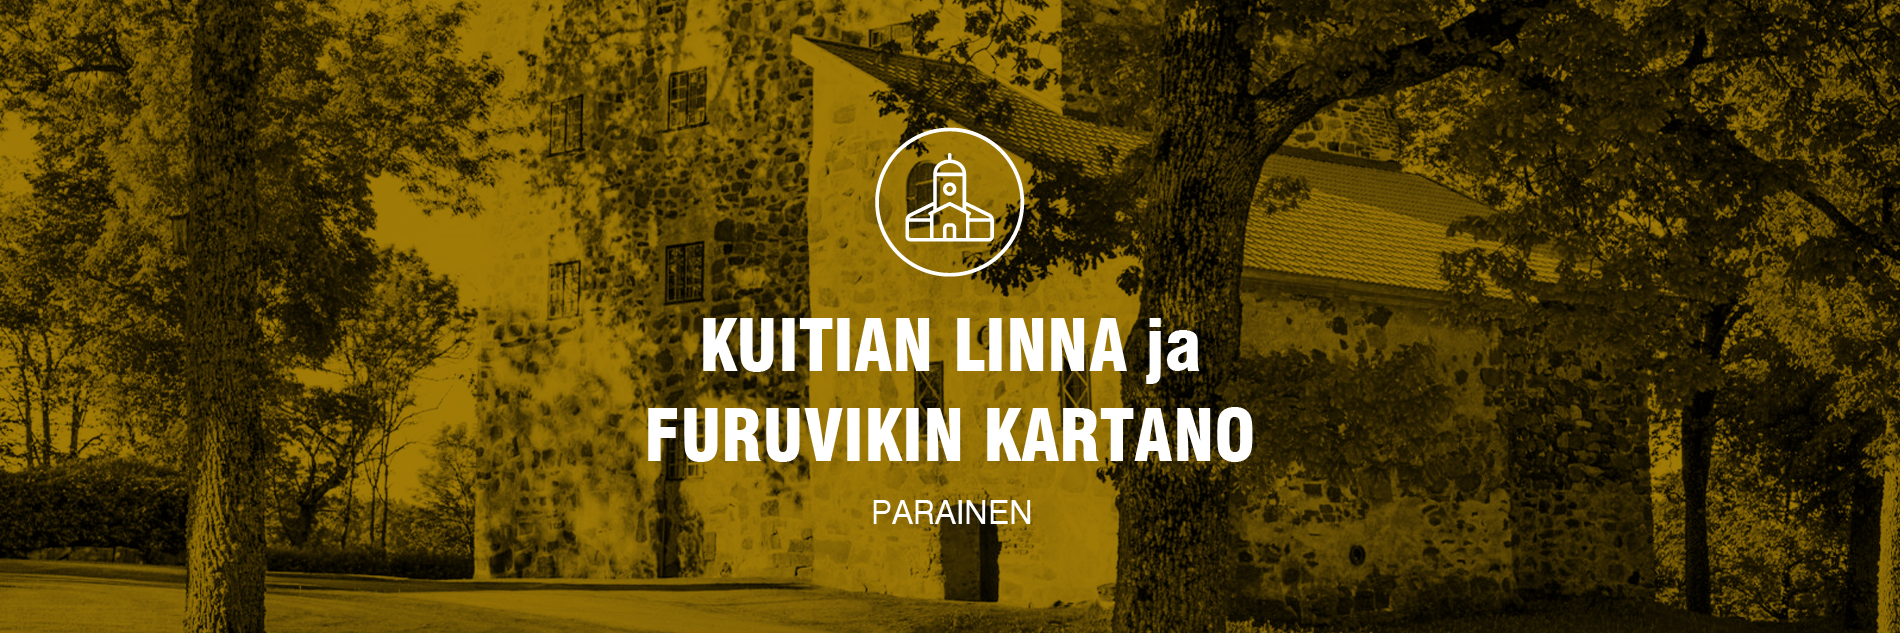 Kuitian linna ja Furuvikin kartano - Museo- ja kartanoretket